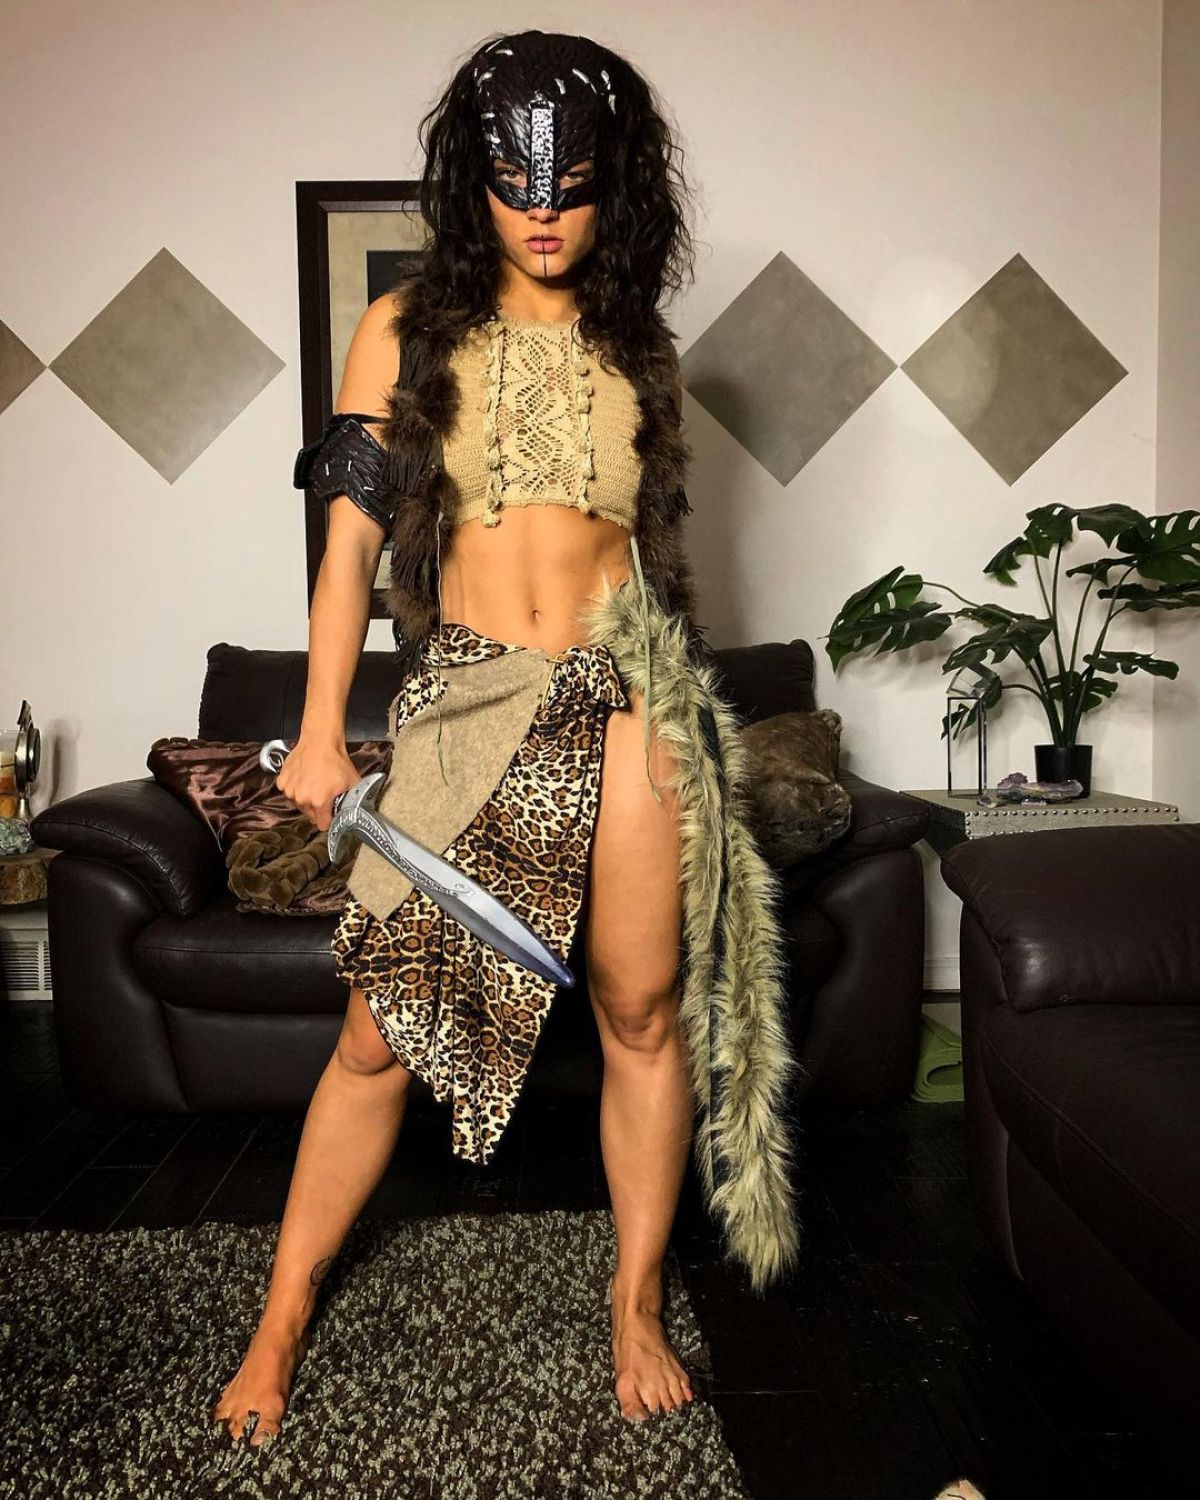 JADE CHYNOWETH in Halloween Costumes - Instagram Photos 11/0